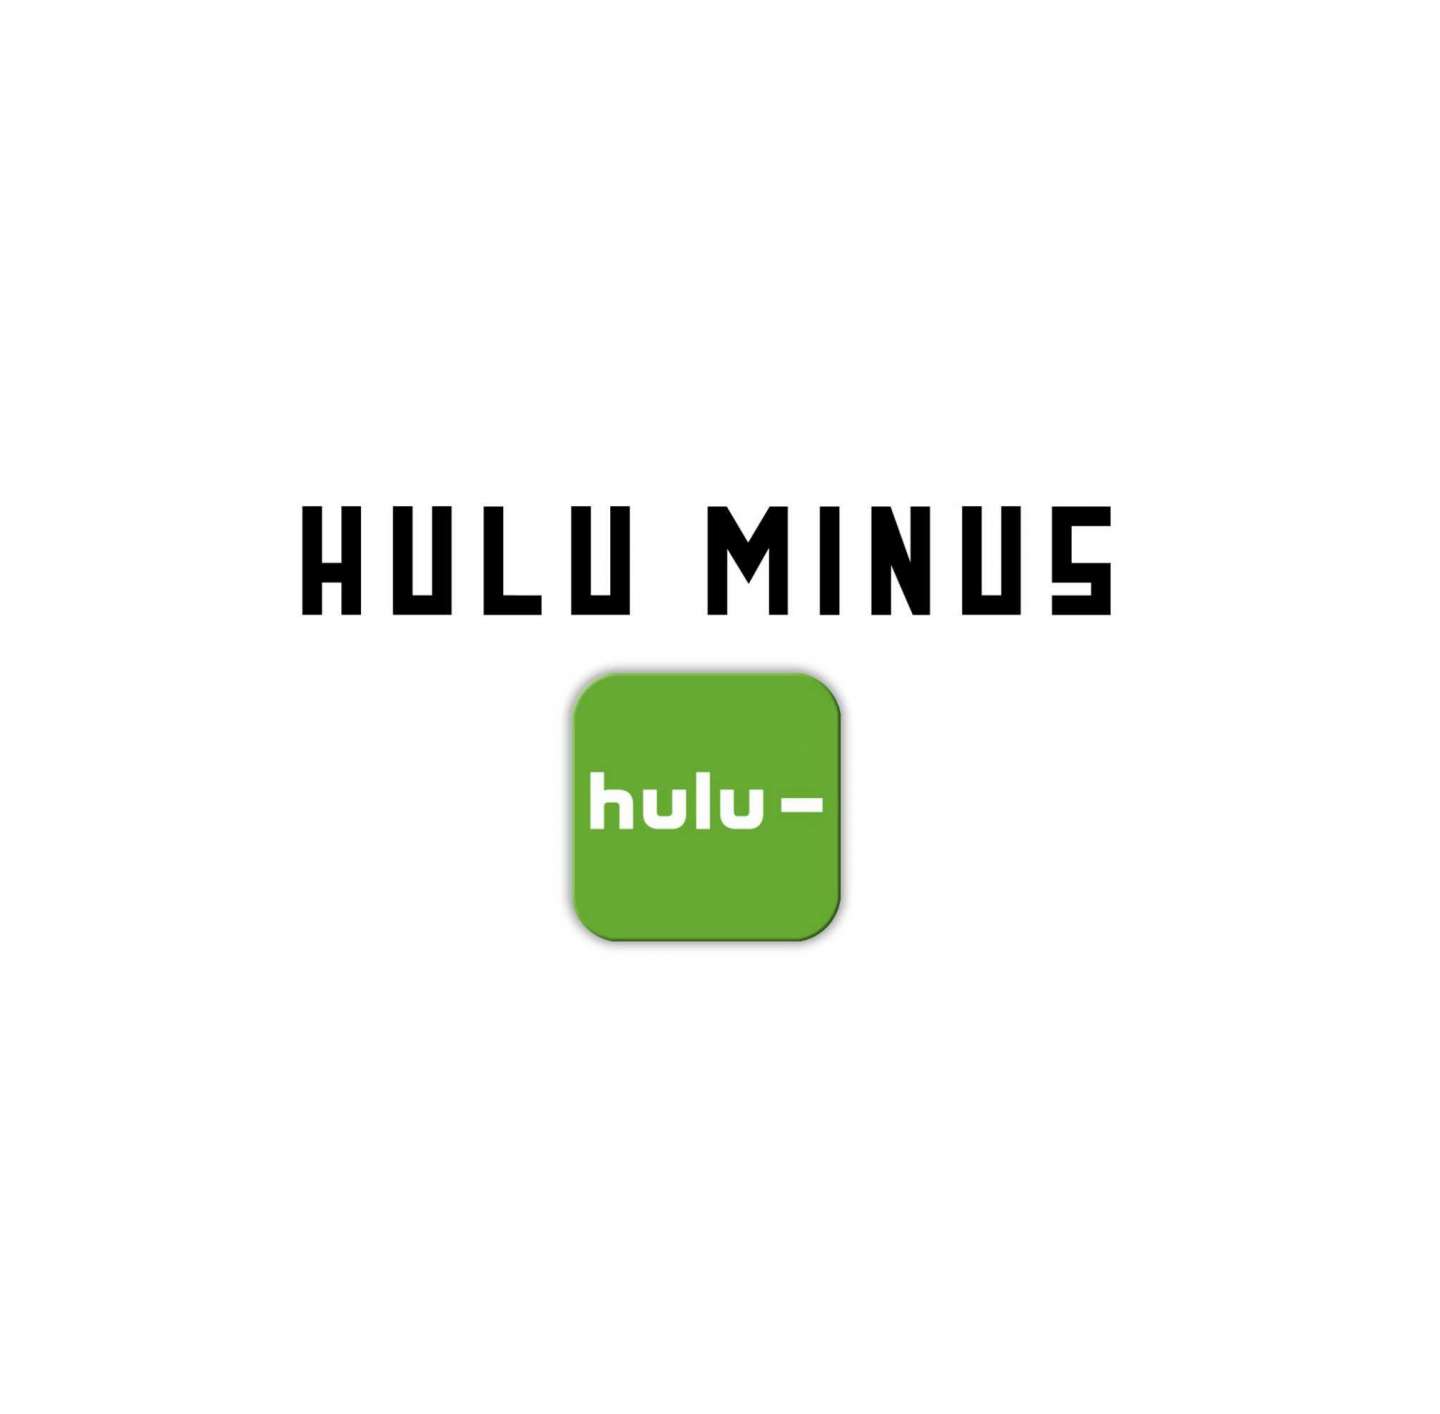 Hulu minus